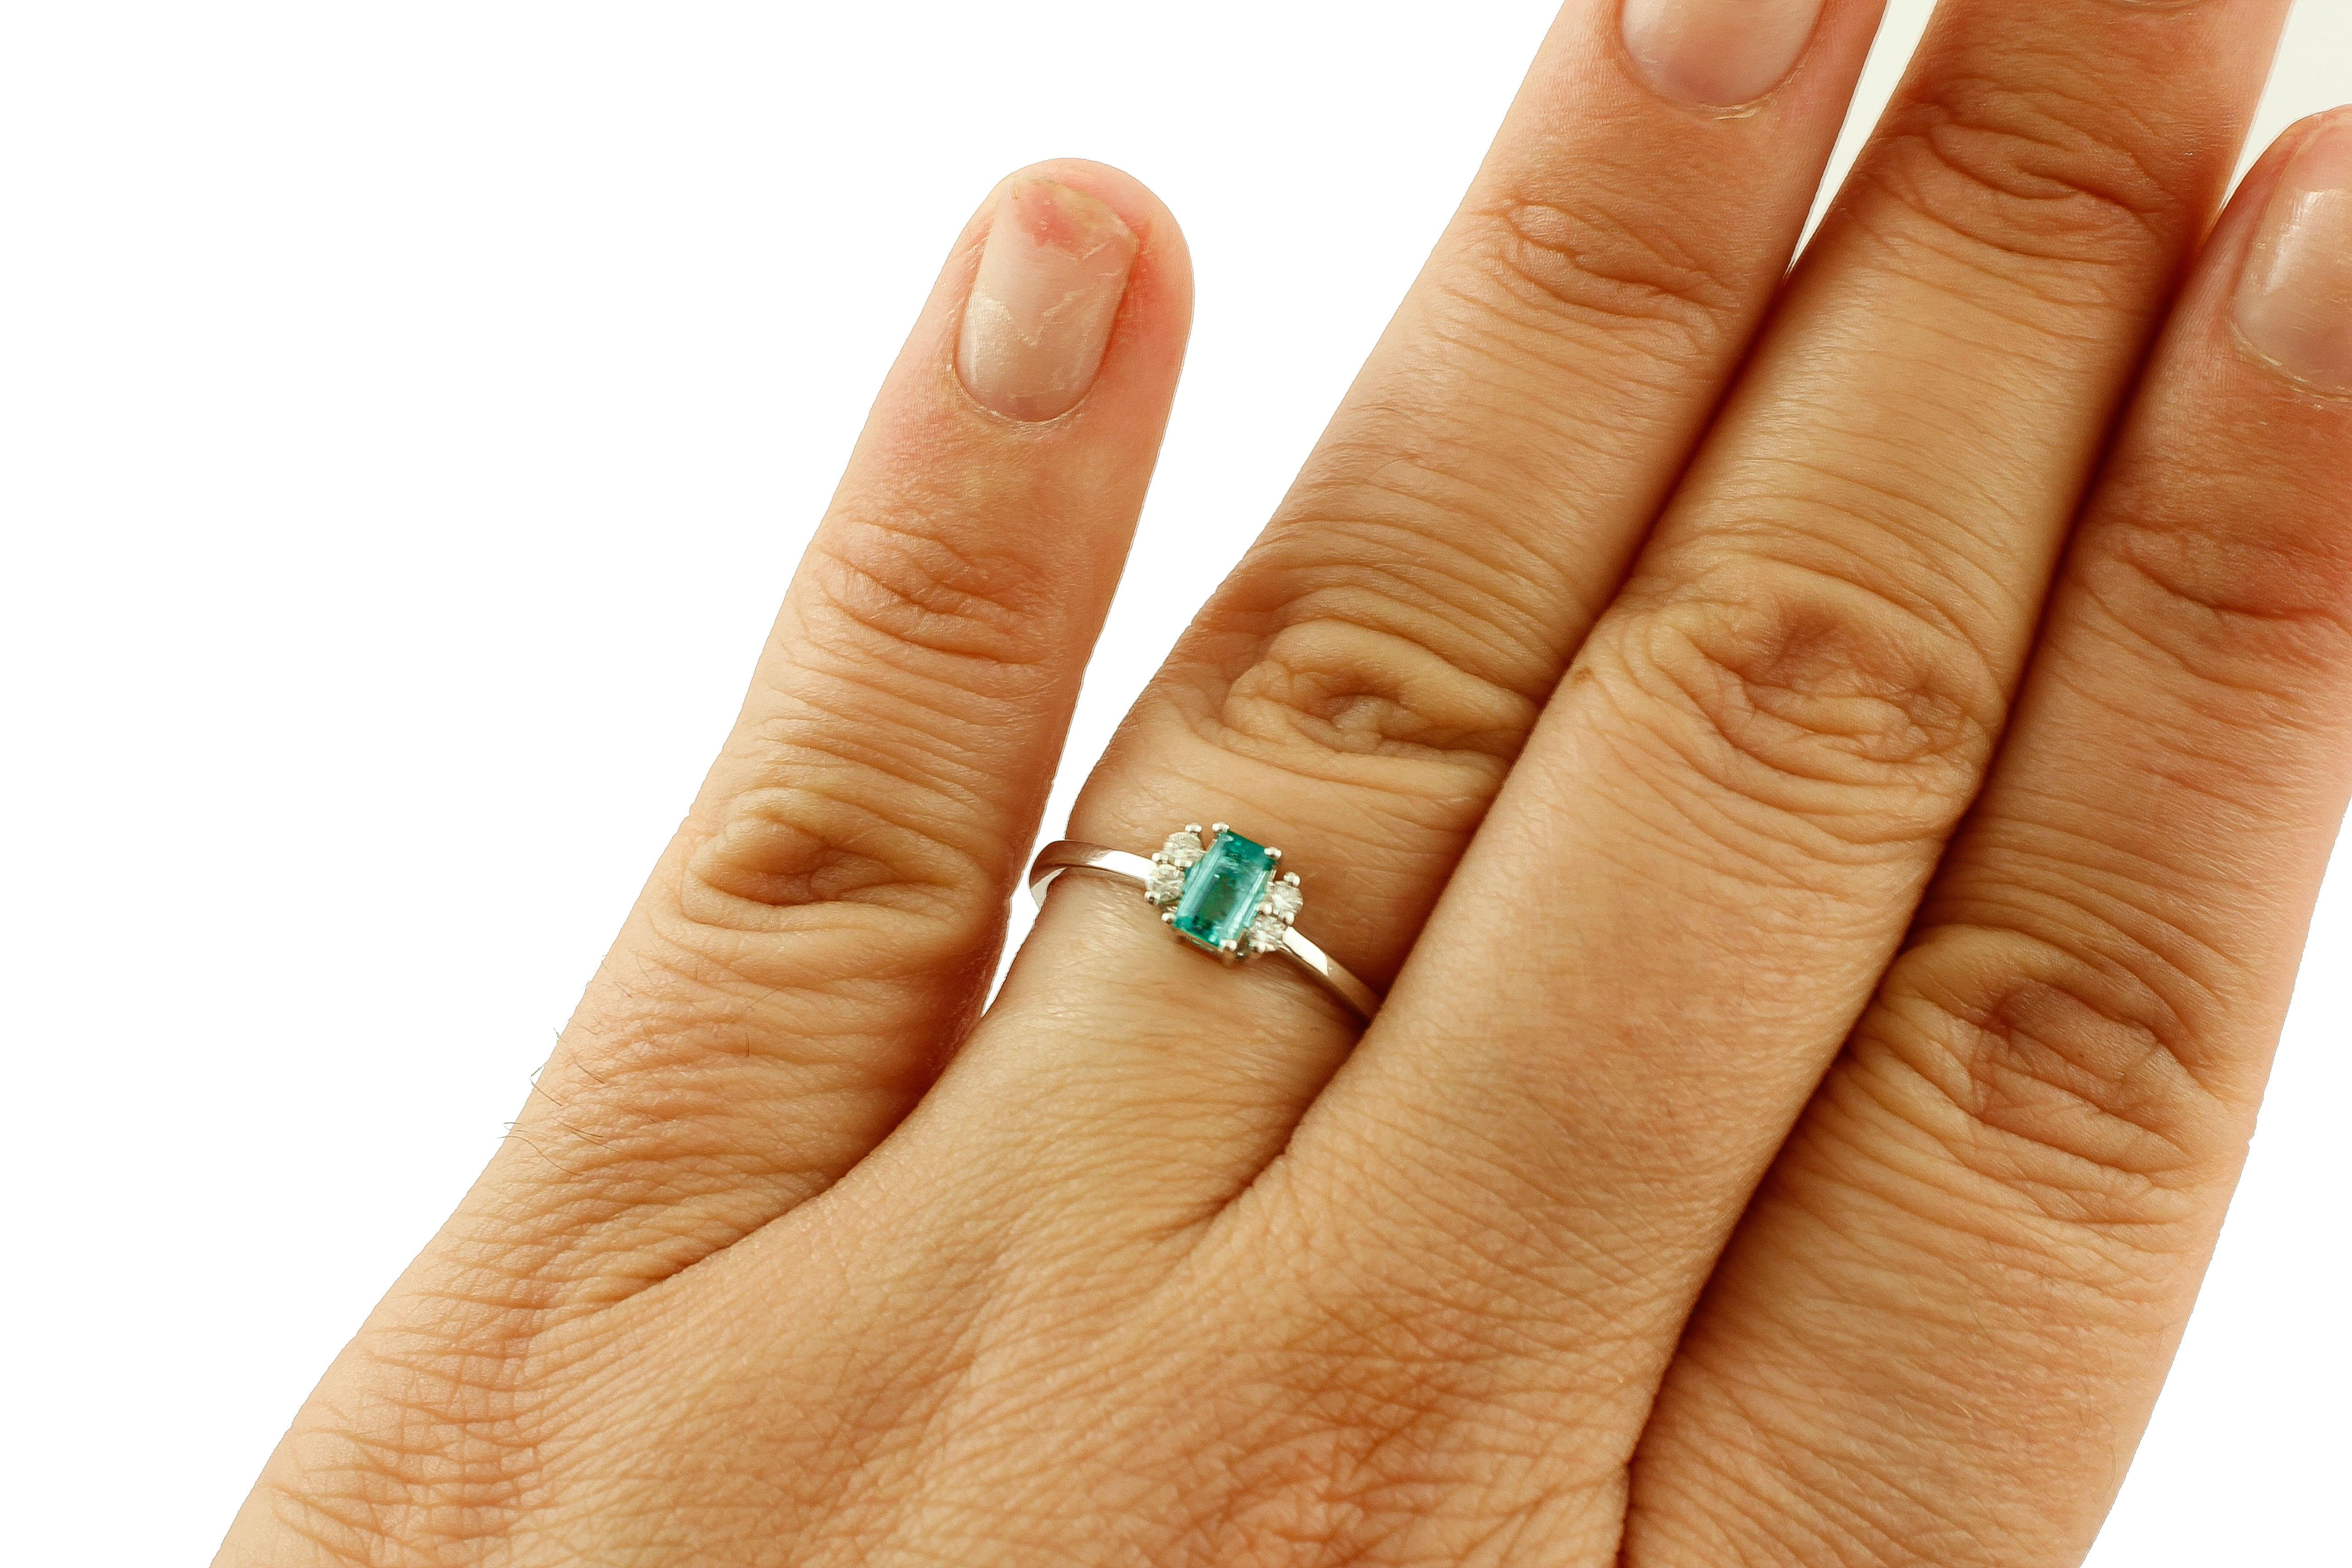 Brilliant Cut Emerald, Diamonds, 18 Karat White Gold, Solitary Ring